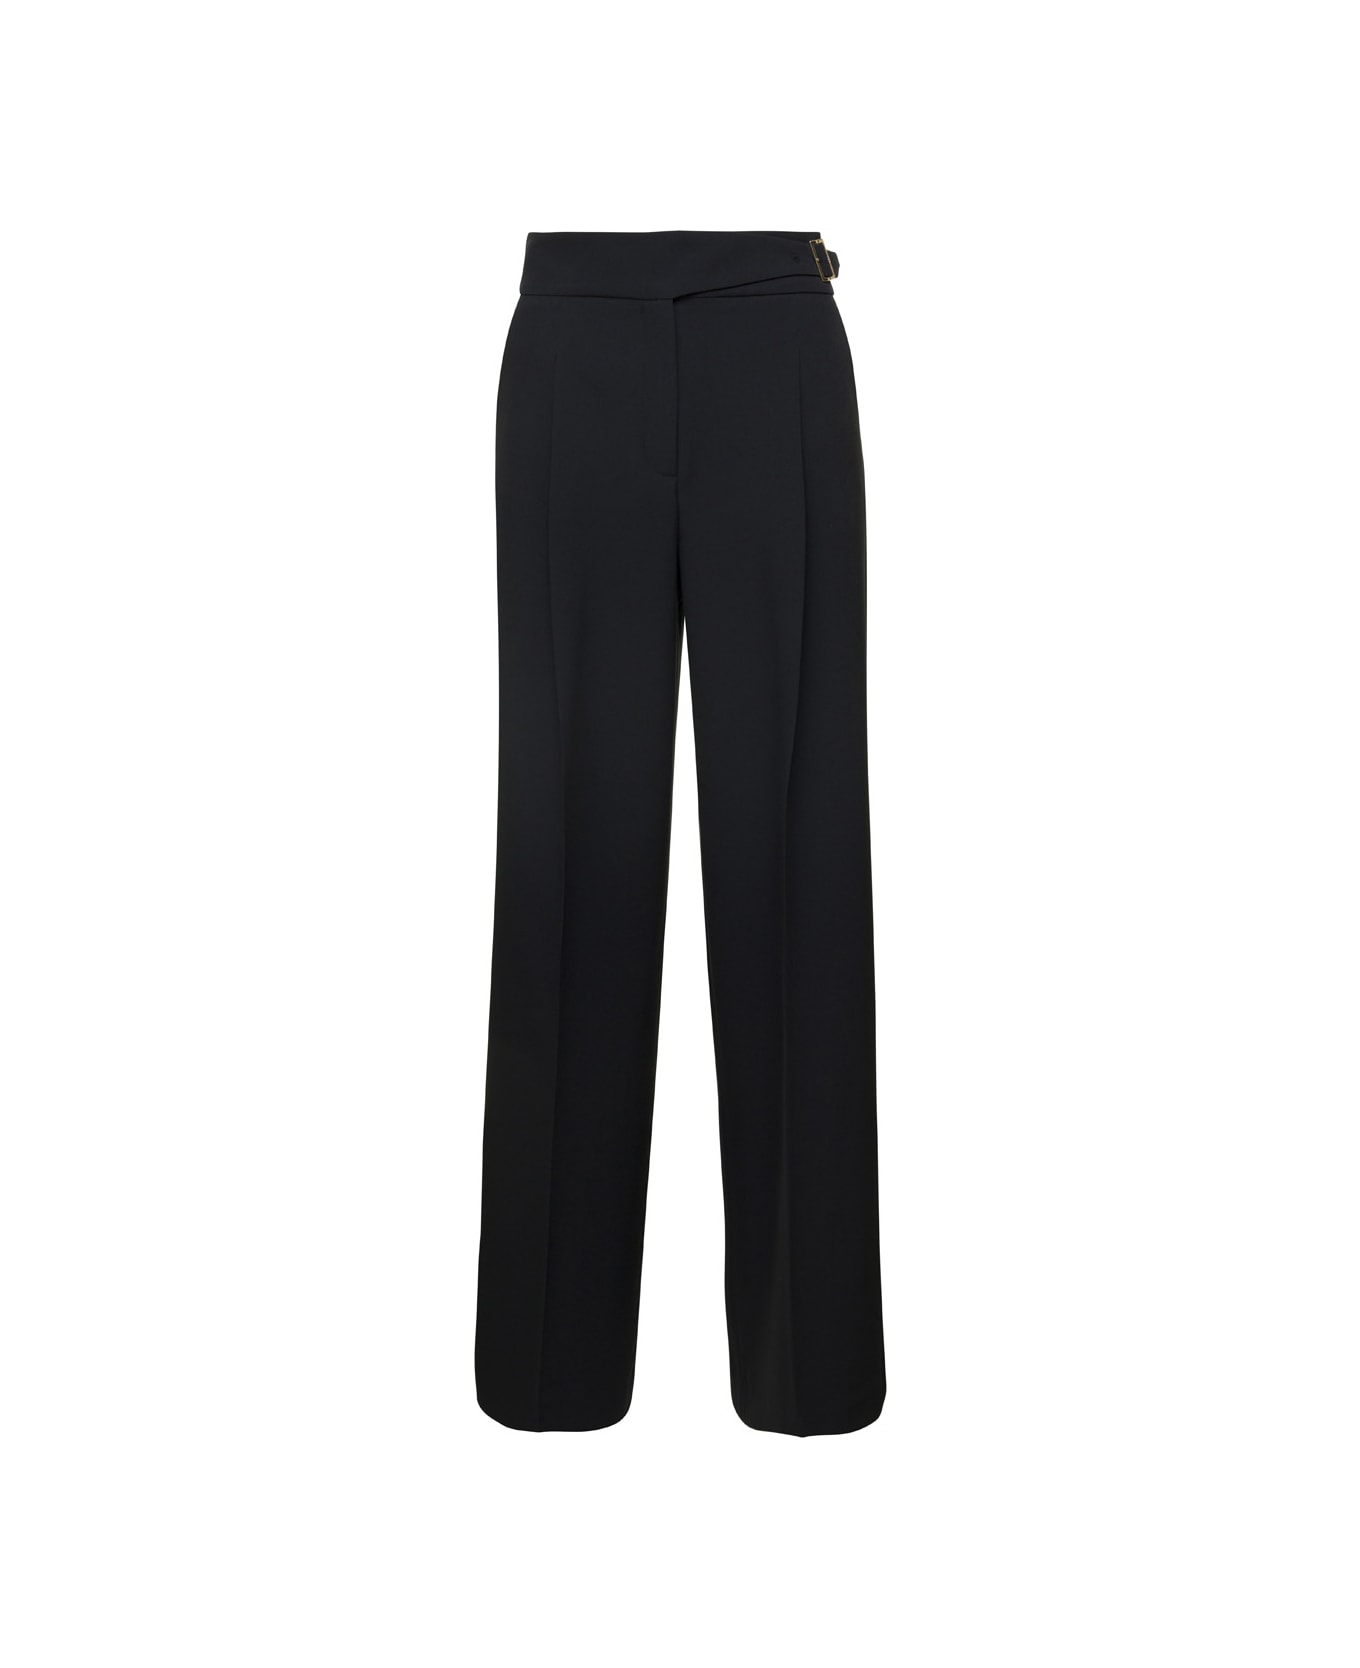 Liu-Jo Black Palazzo Pants With Darts In Stretch Technical Fabric Woman - Black ボトムス